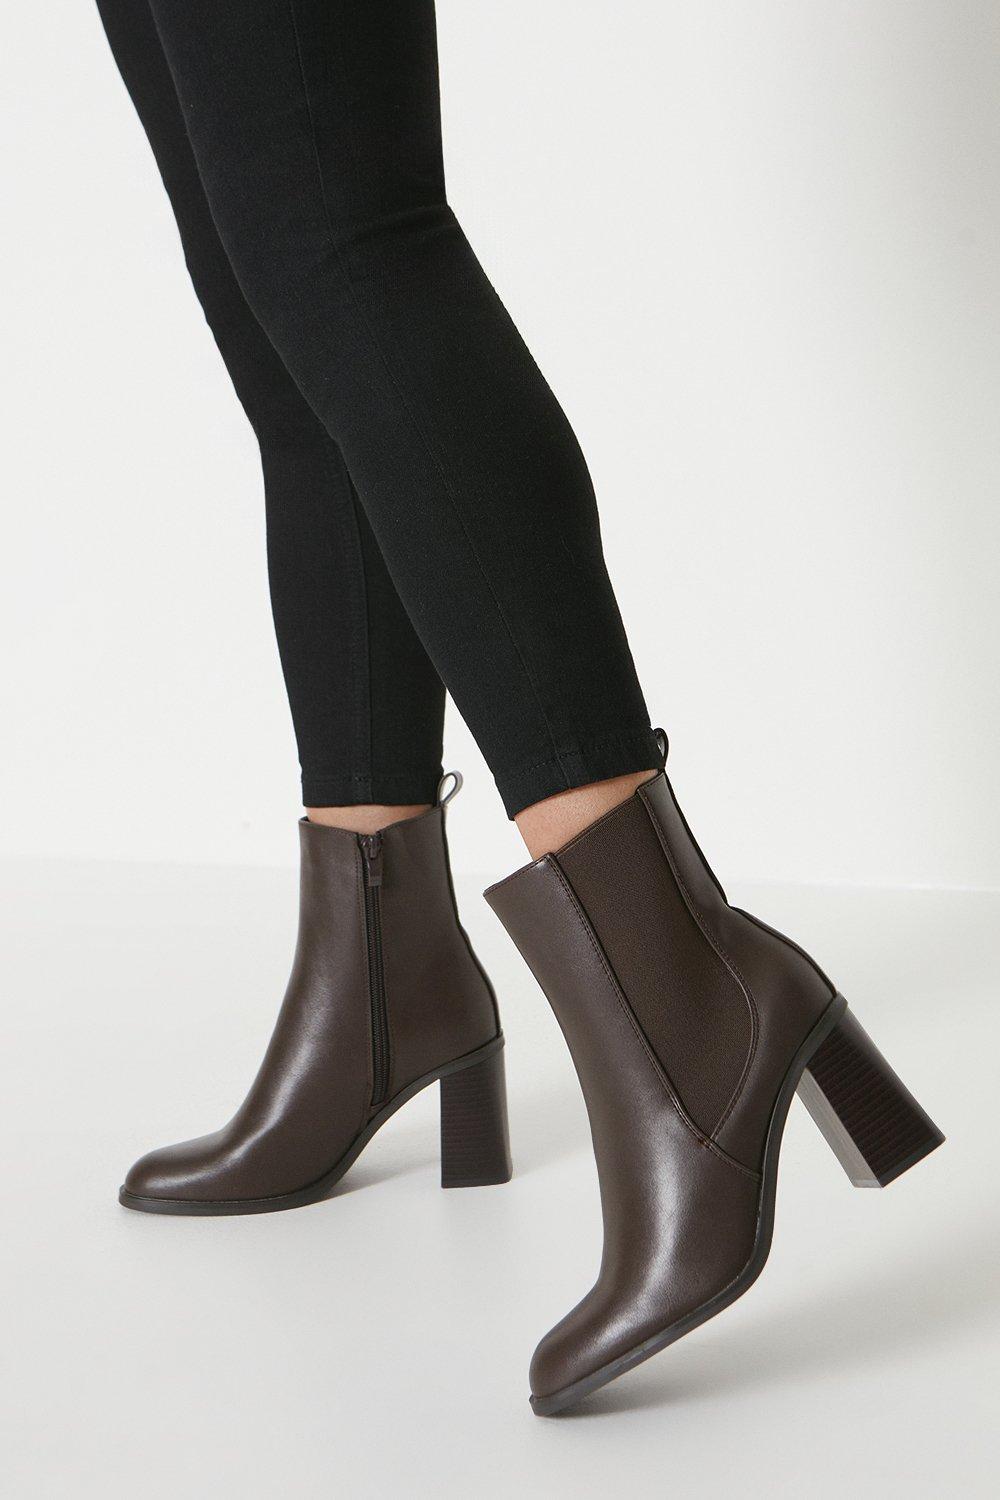 Women's Faith: Marabella Almond Toe High Block Heel Ankle Boots - brown - 4